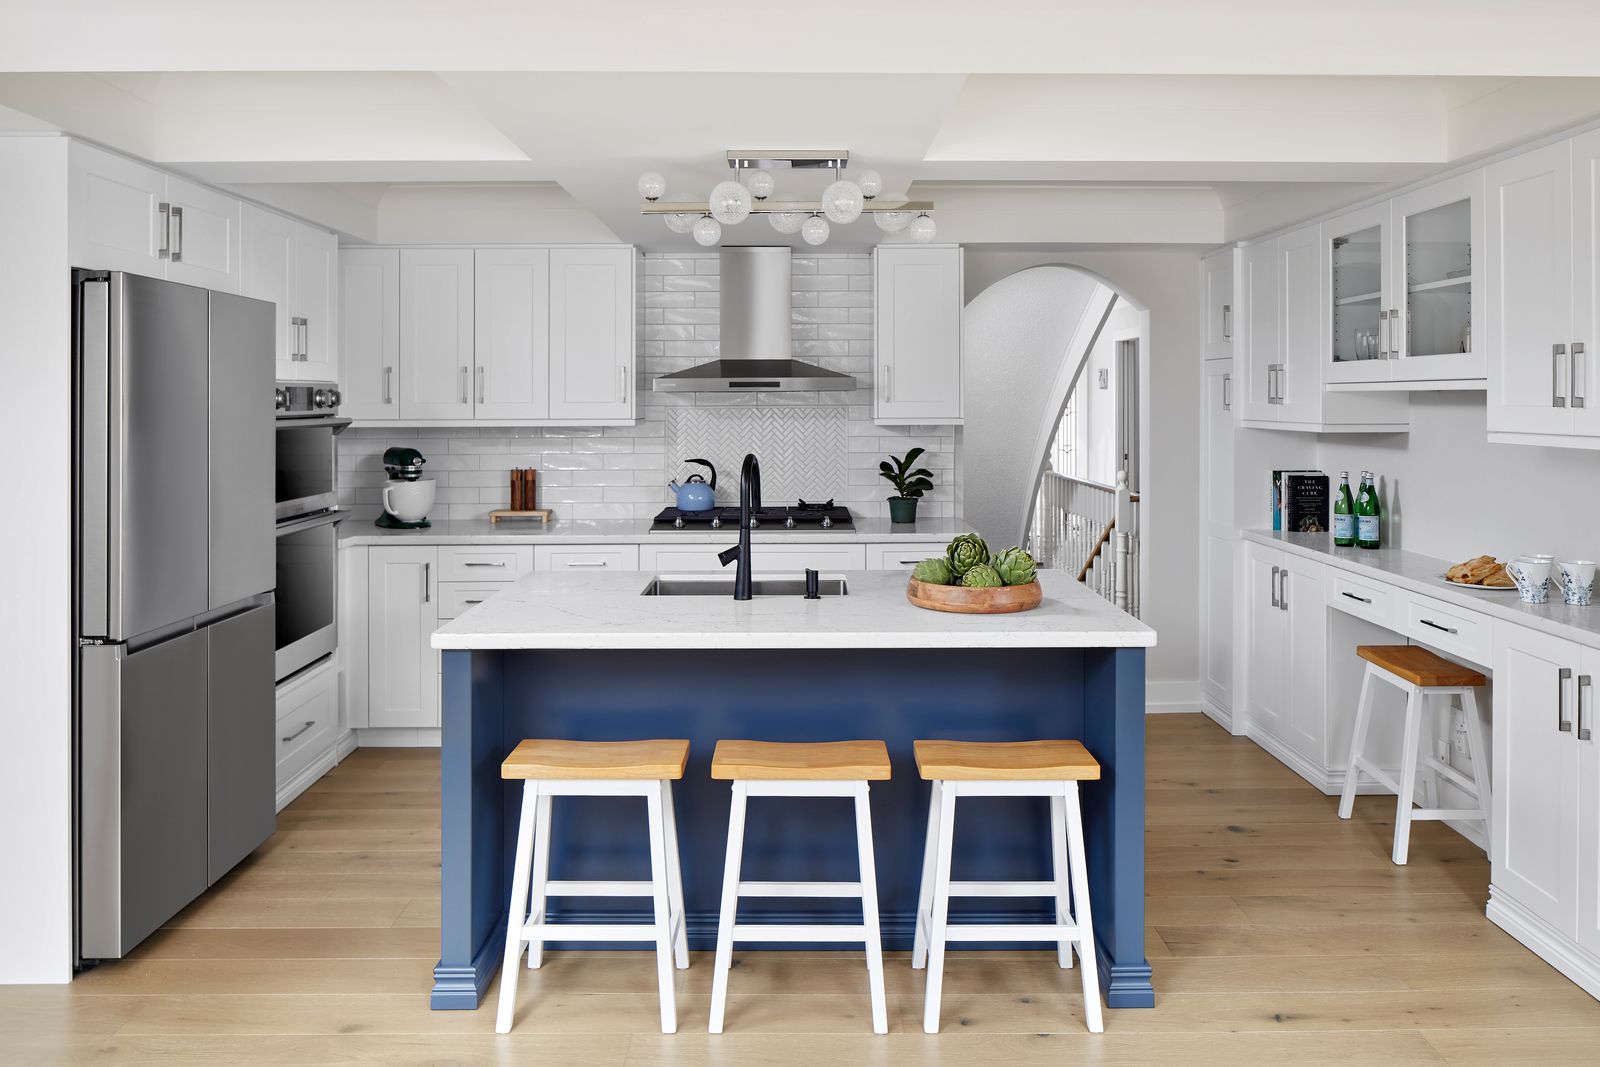 white modern kitchen with herringbone style backsplash blue island and barstools in markham renovation